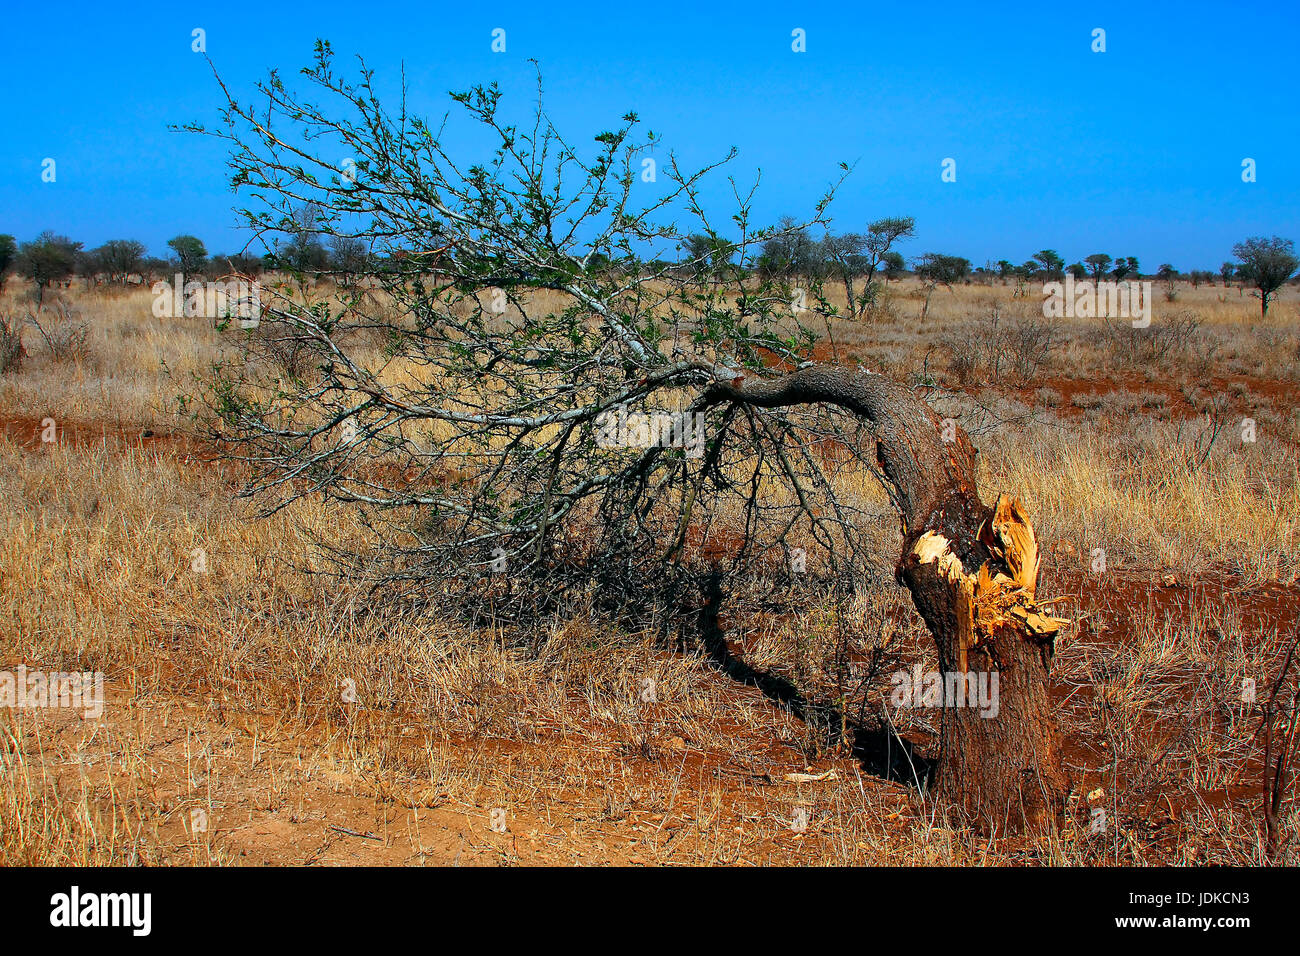 Wrecked tree in scenery - South Africa, Demolierter Baum in Landschaft - Suedafrika Stock Photo